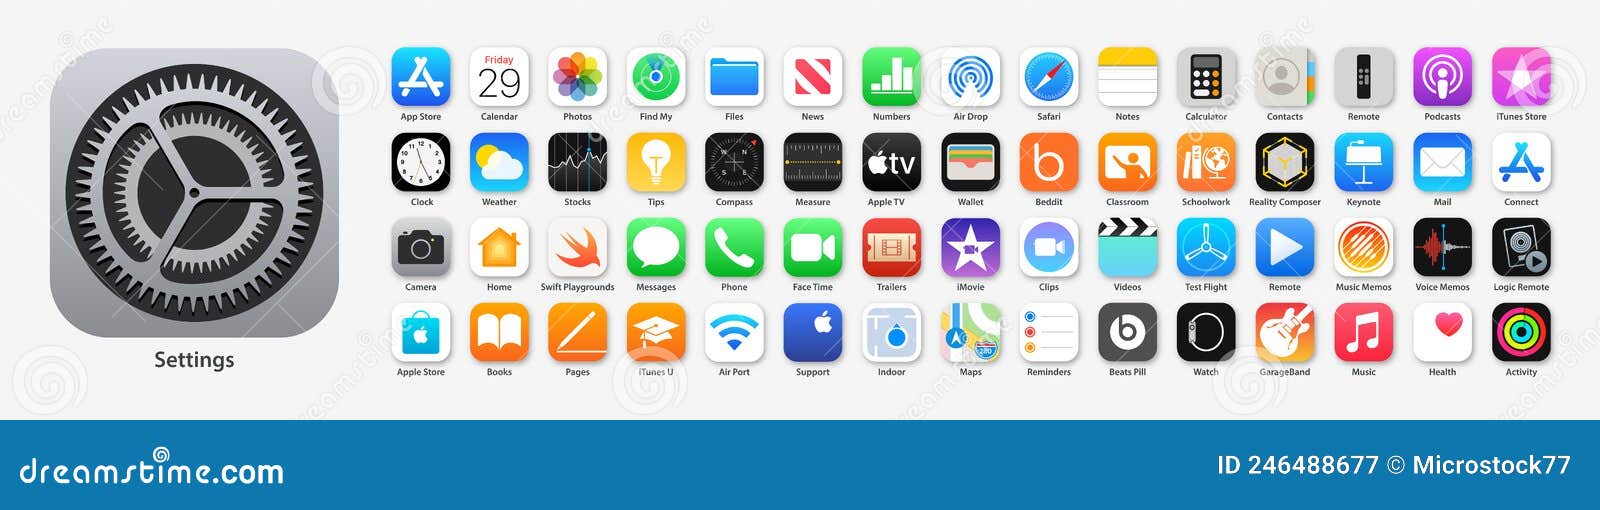 Apple App Icon, Ios, IPhone, IMac, IPad, MacBook, Vector Editorial